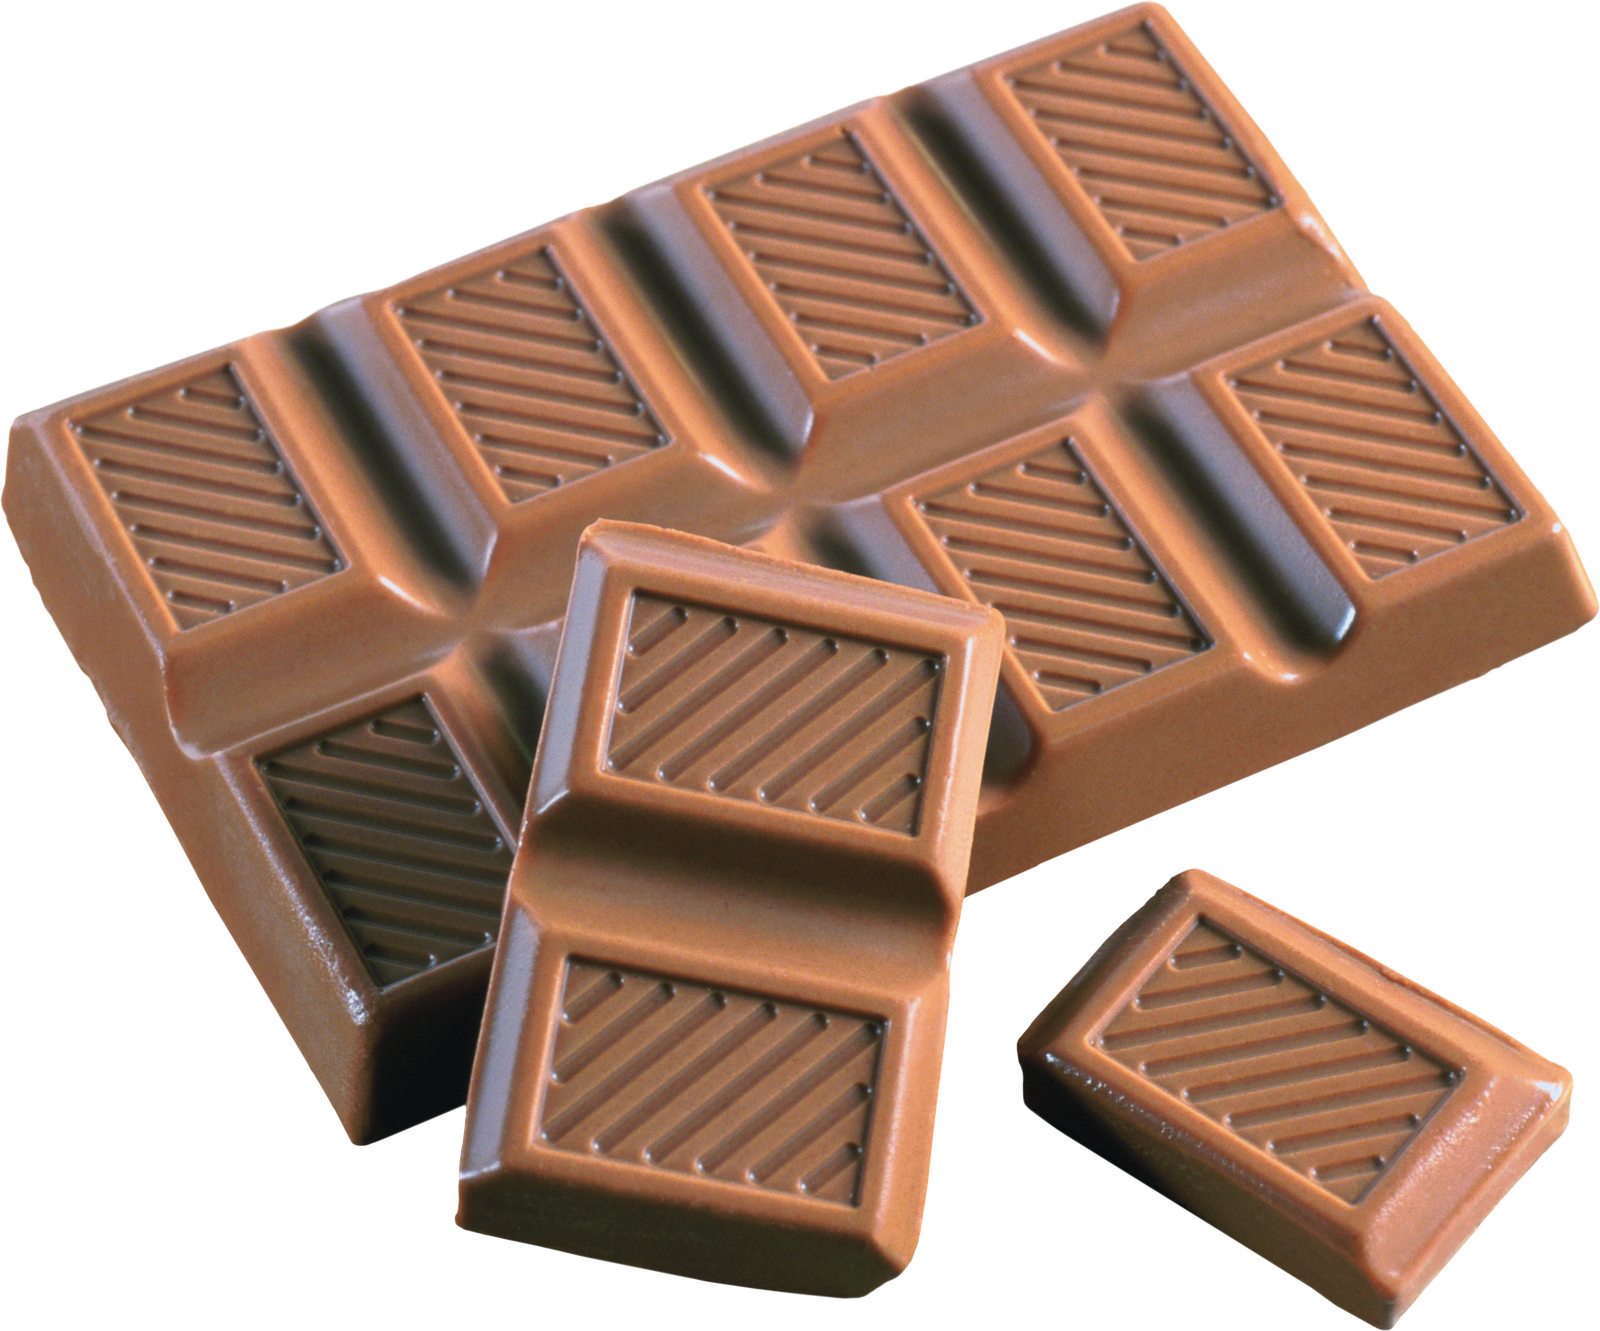 Chocolate Bar Png Image - Chocolate Bar, Transparent background PNG HD thumbnail